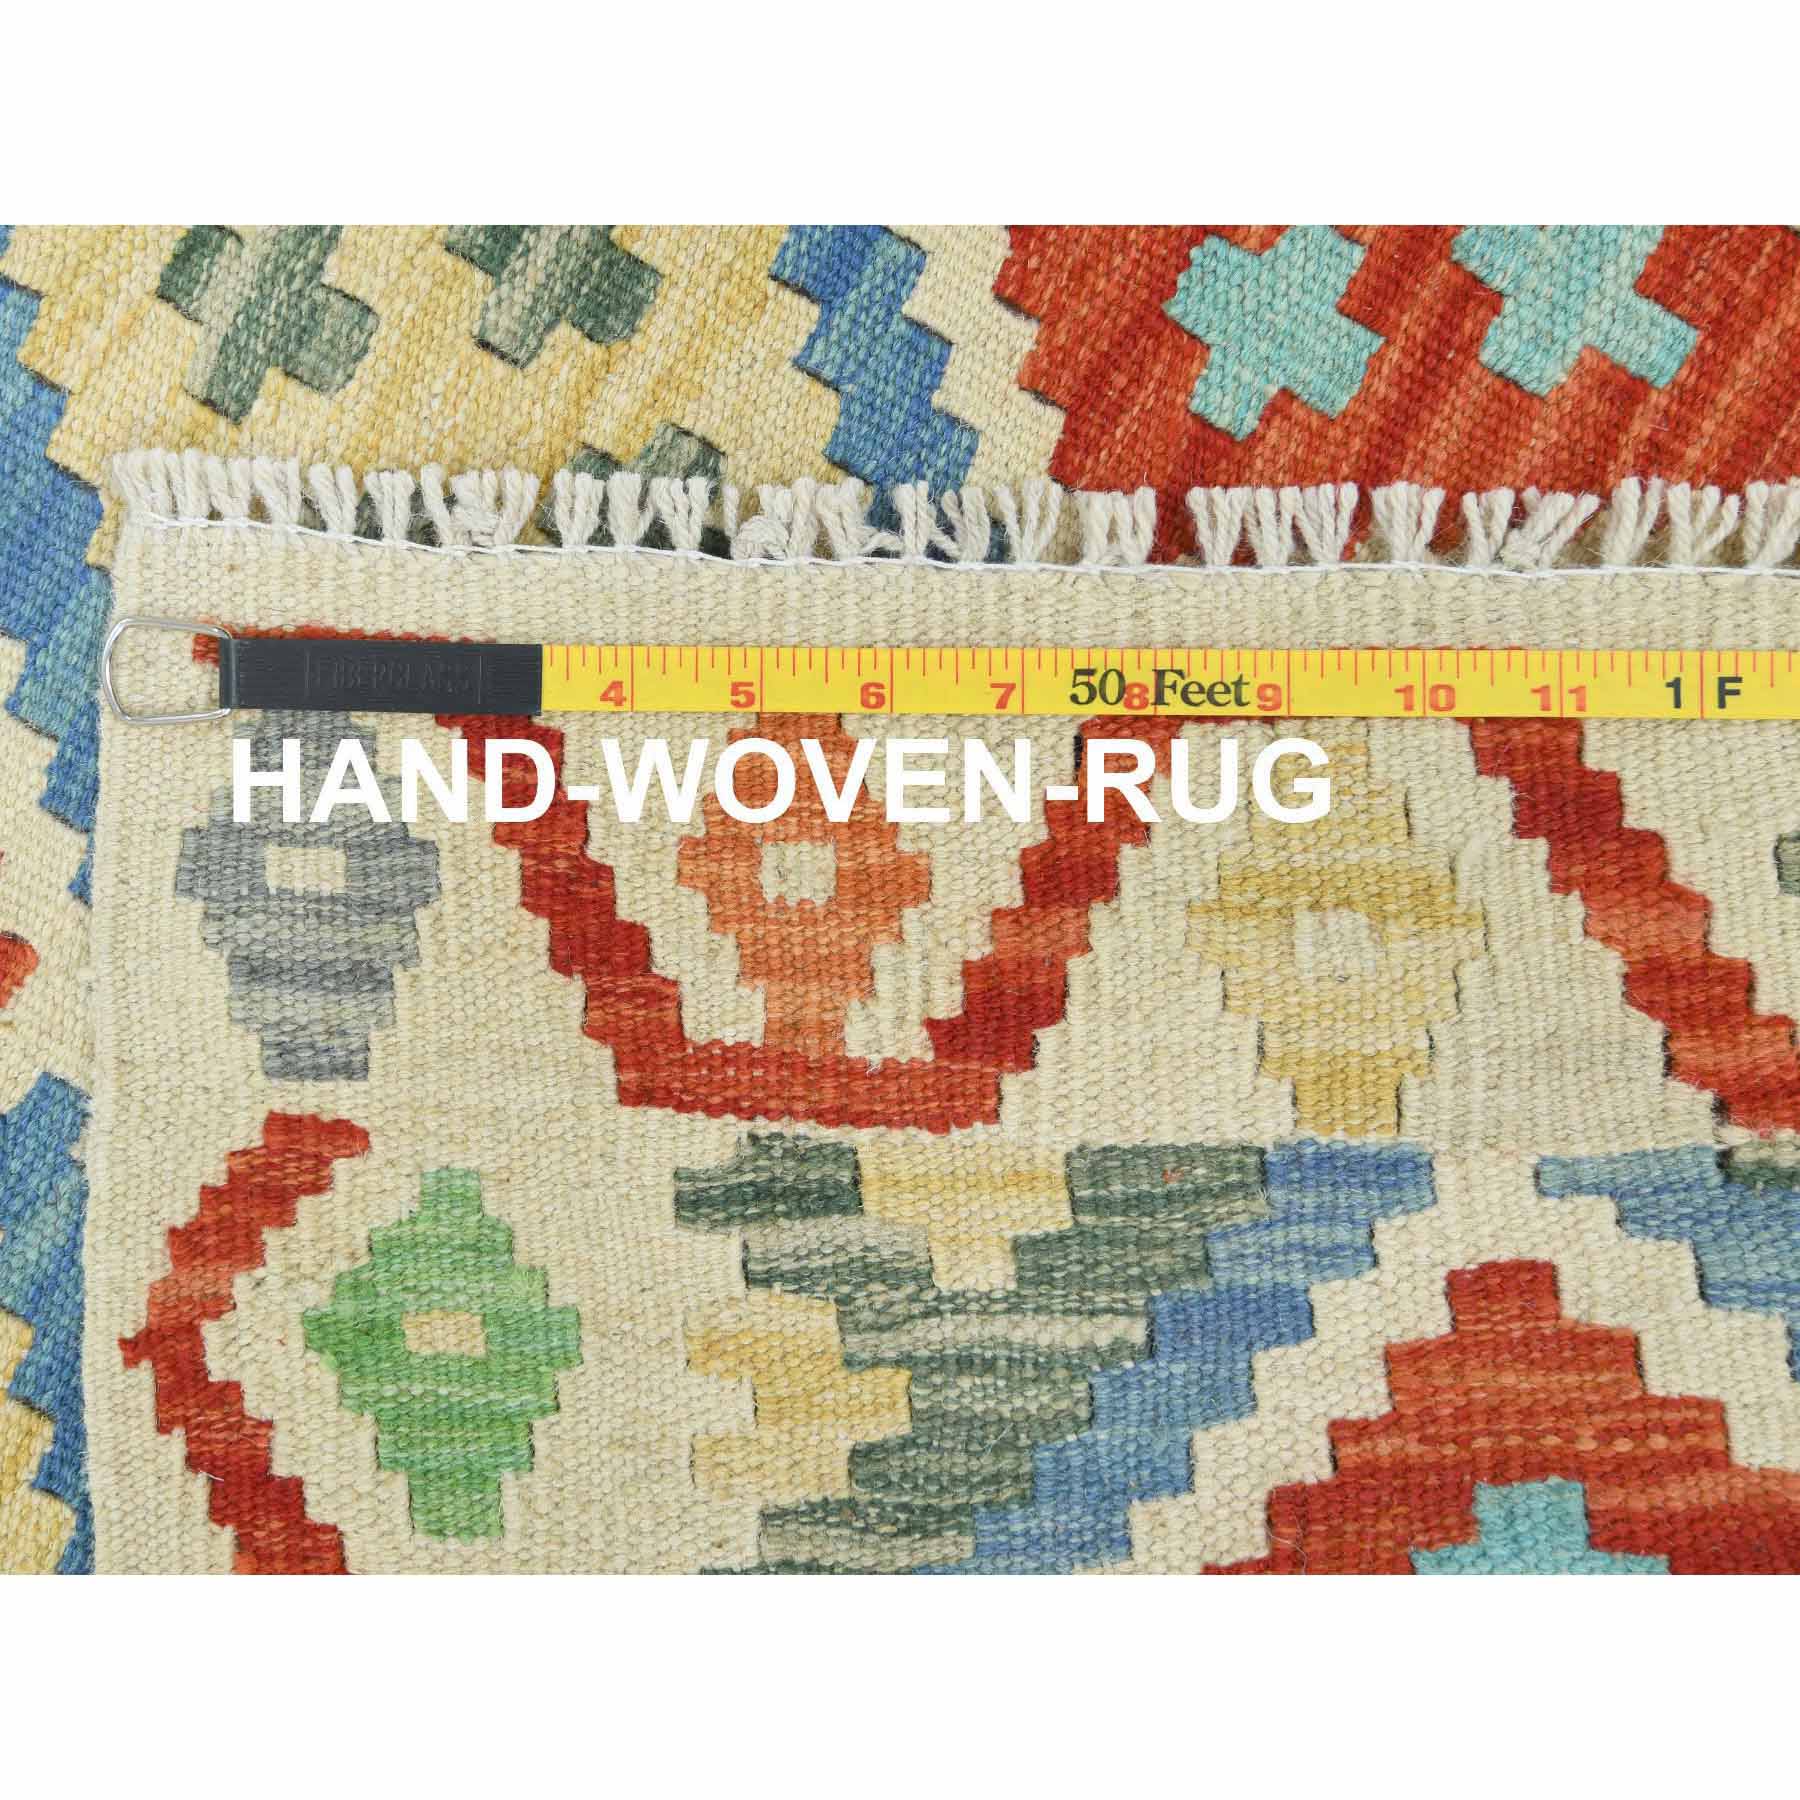 Flat-Weave-Hand-Woven-Rug-410870